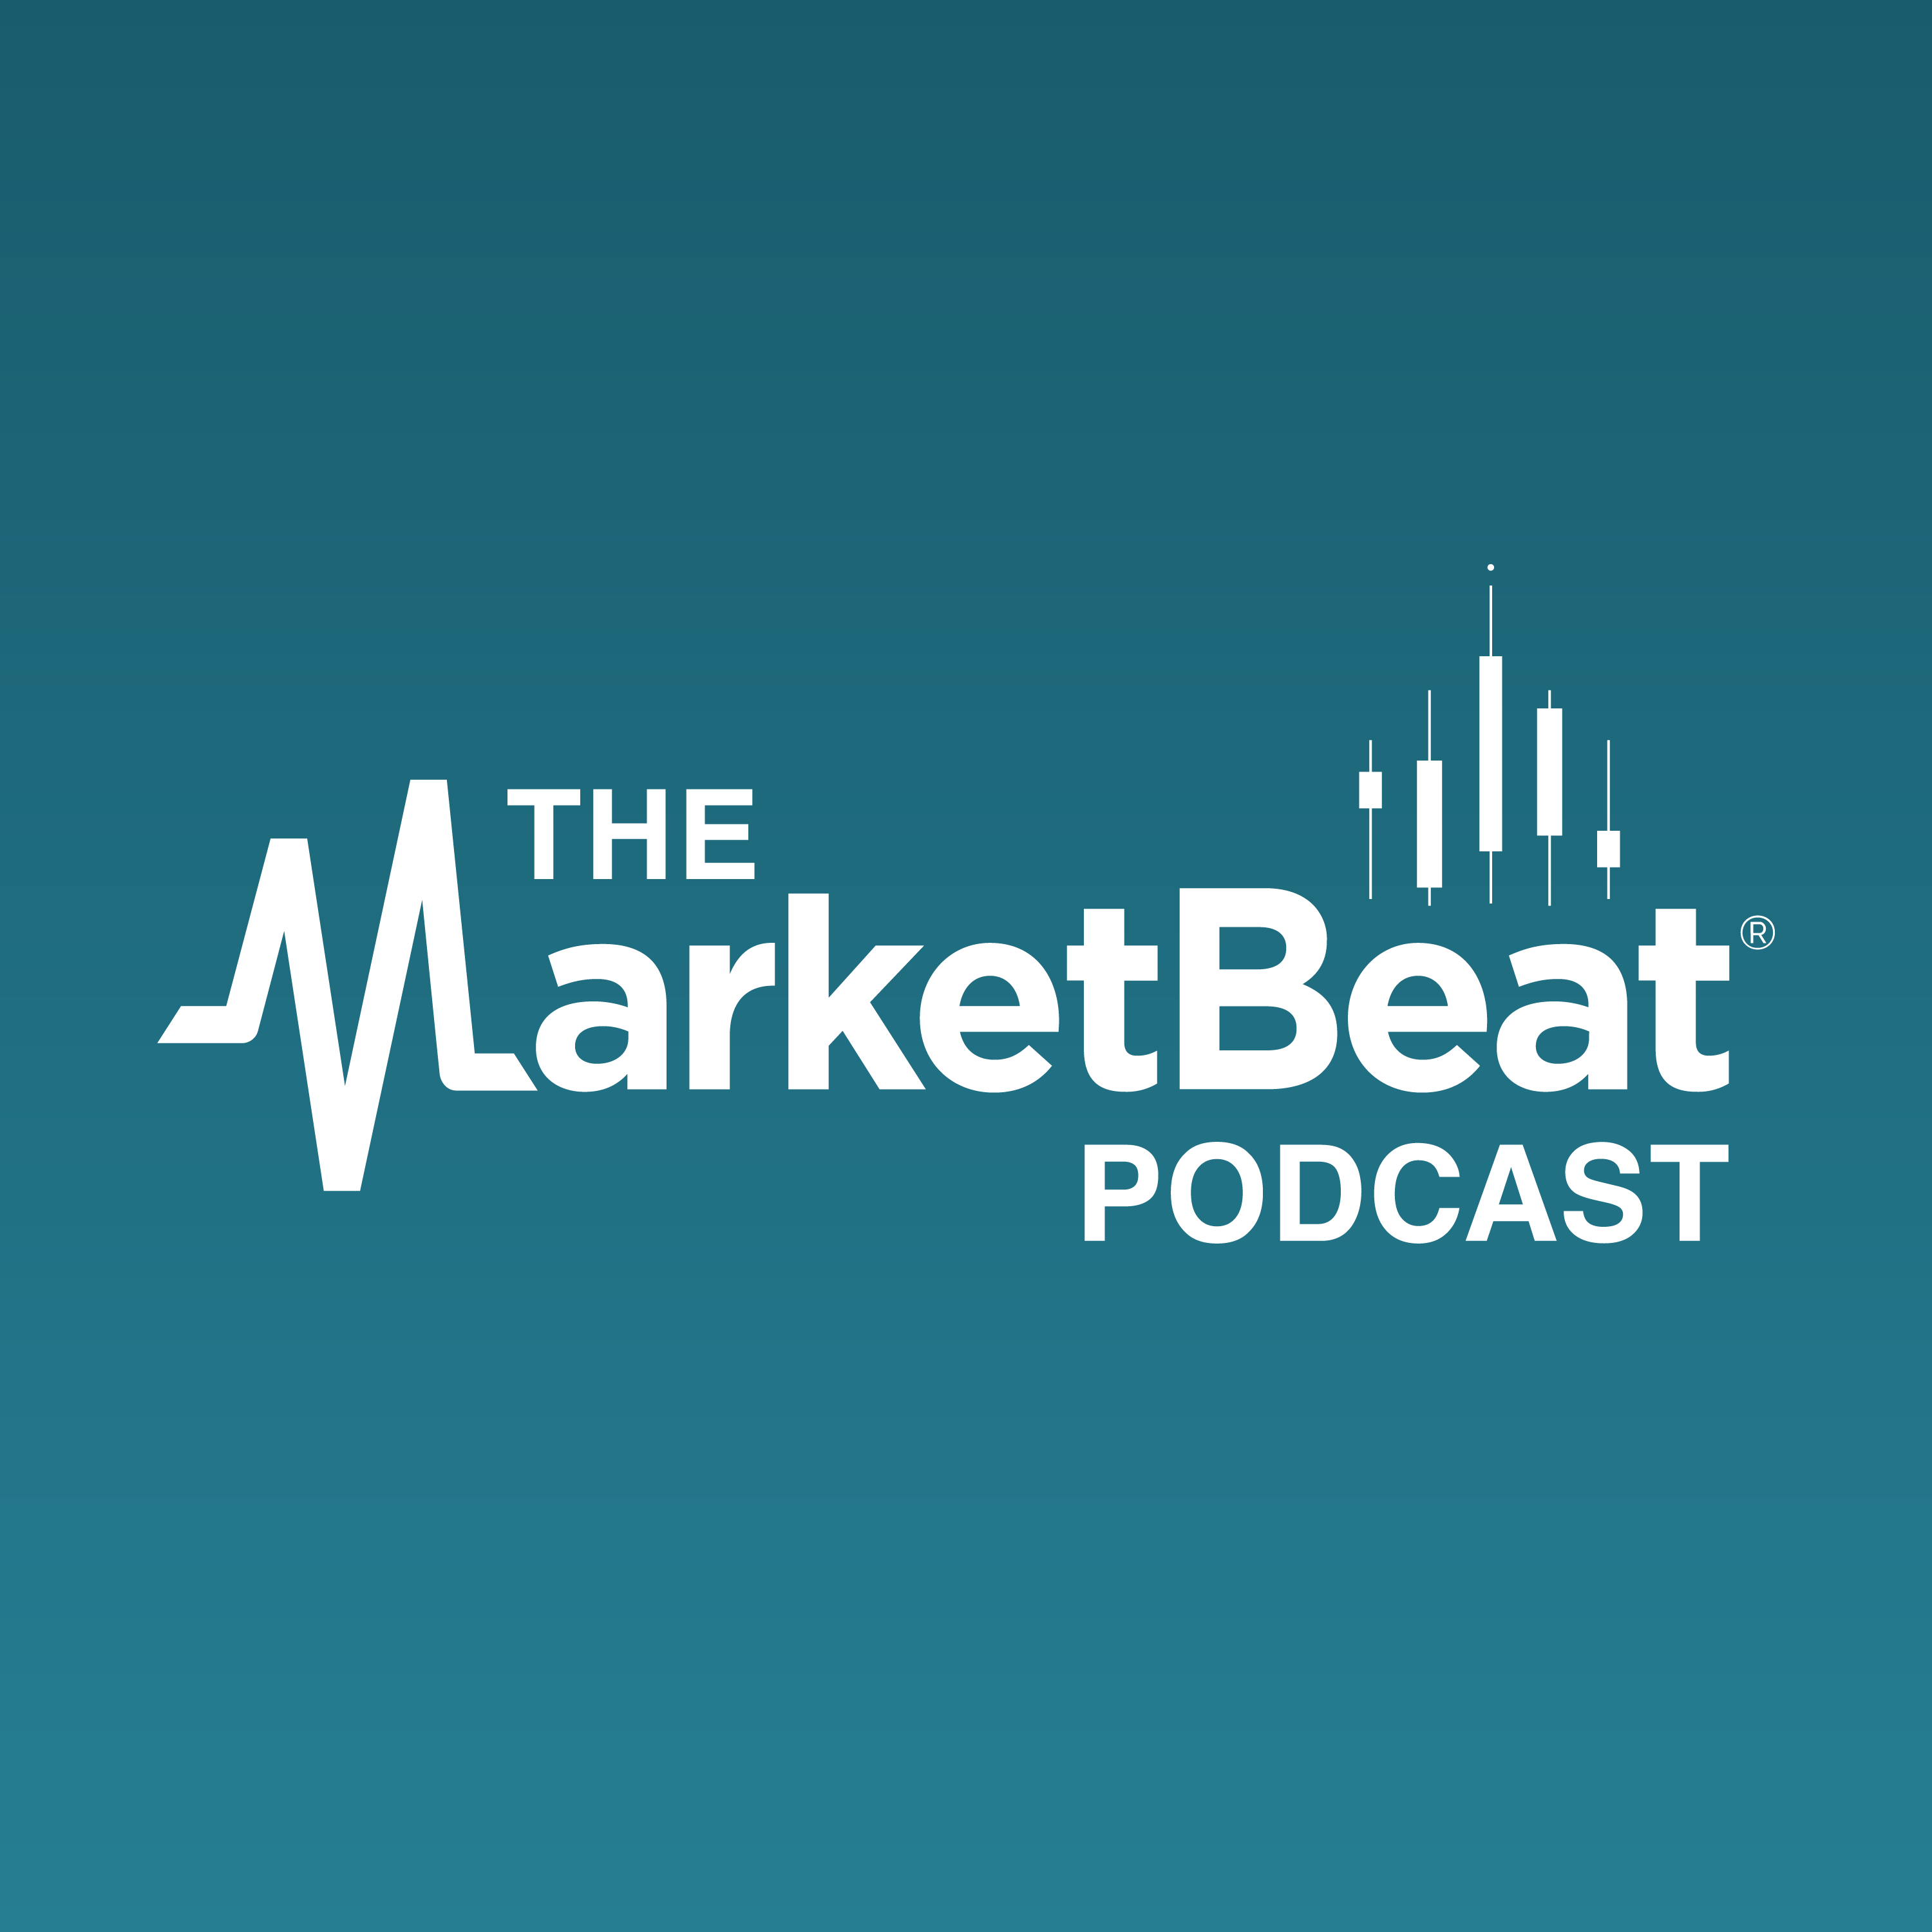 The MarketBeat Podcast